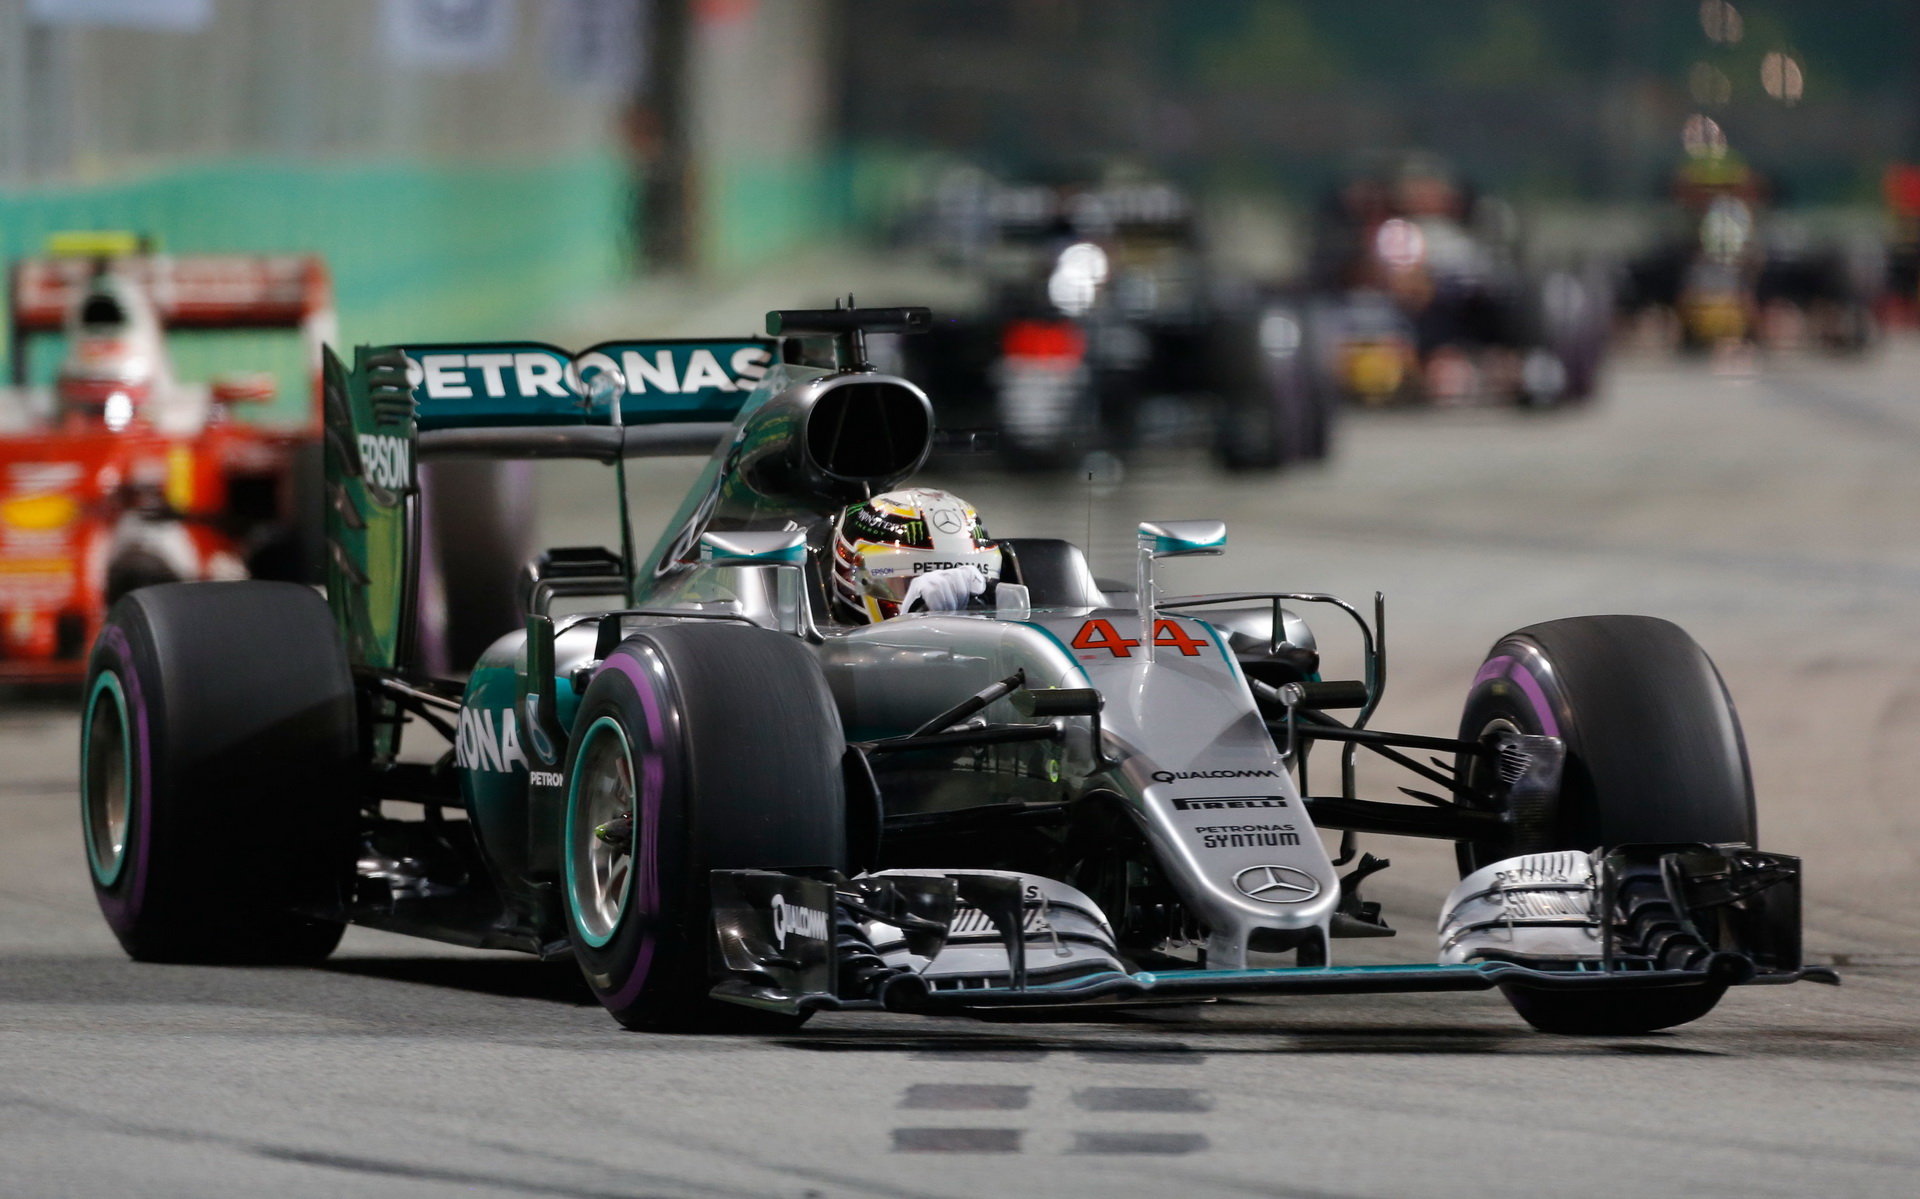 Lewis Hamilton v závodě v Singapuru